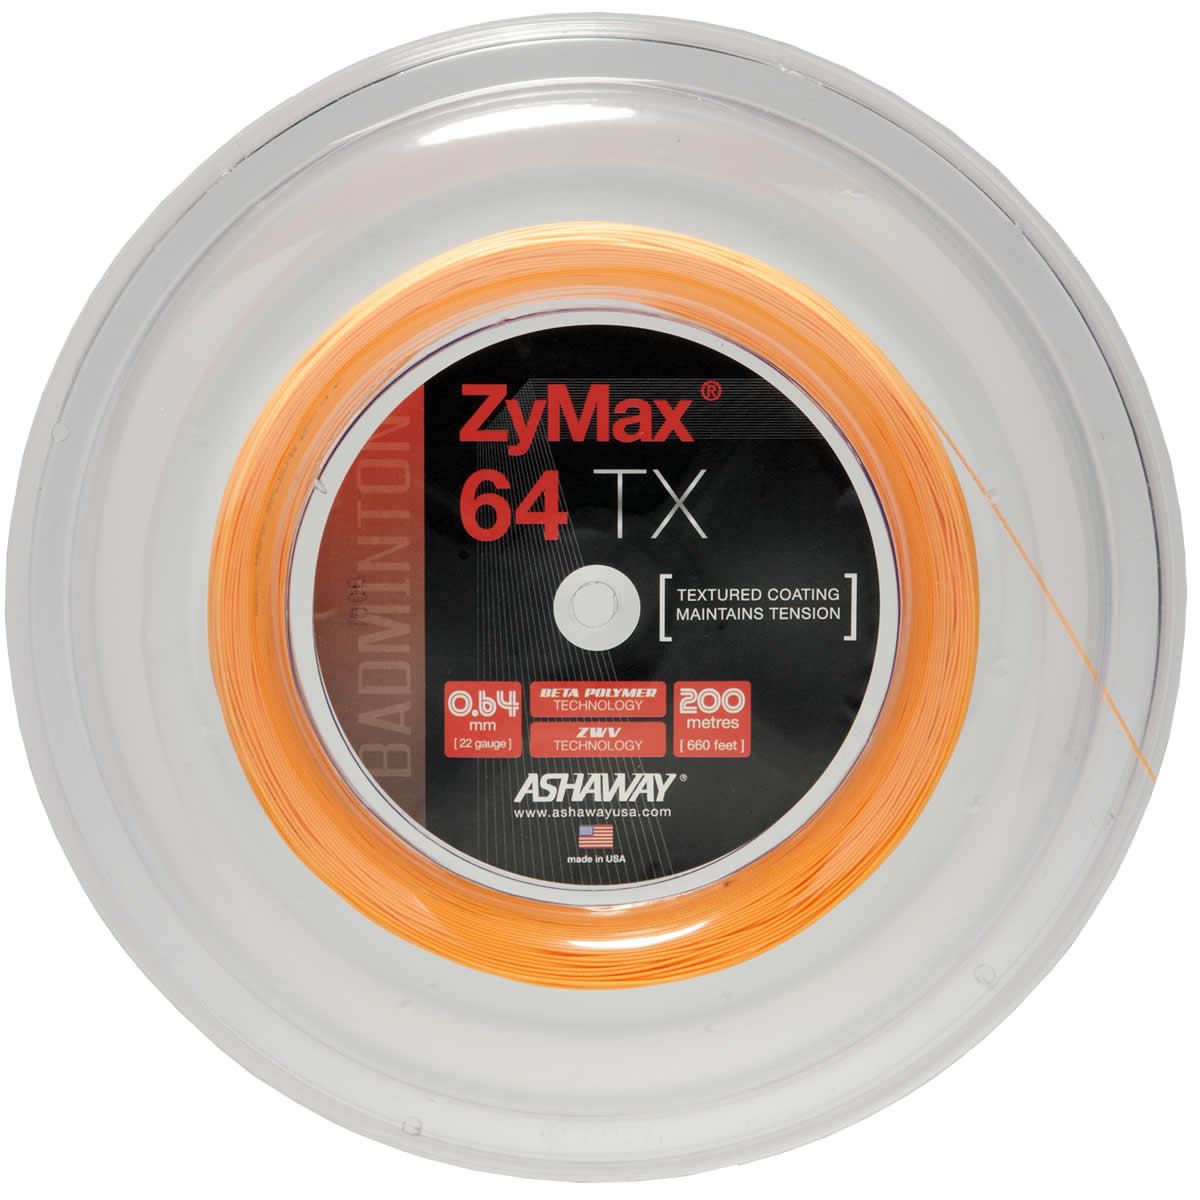 Ashaway Zymax 64 TX Badminton String Orange - 0.64MM - 200m Reel